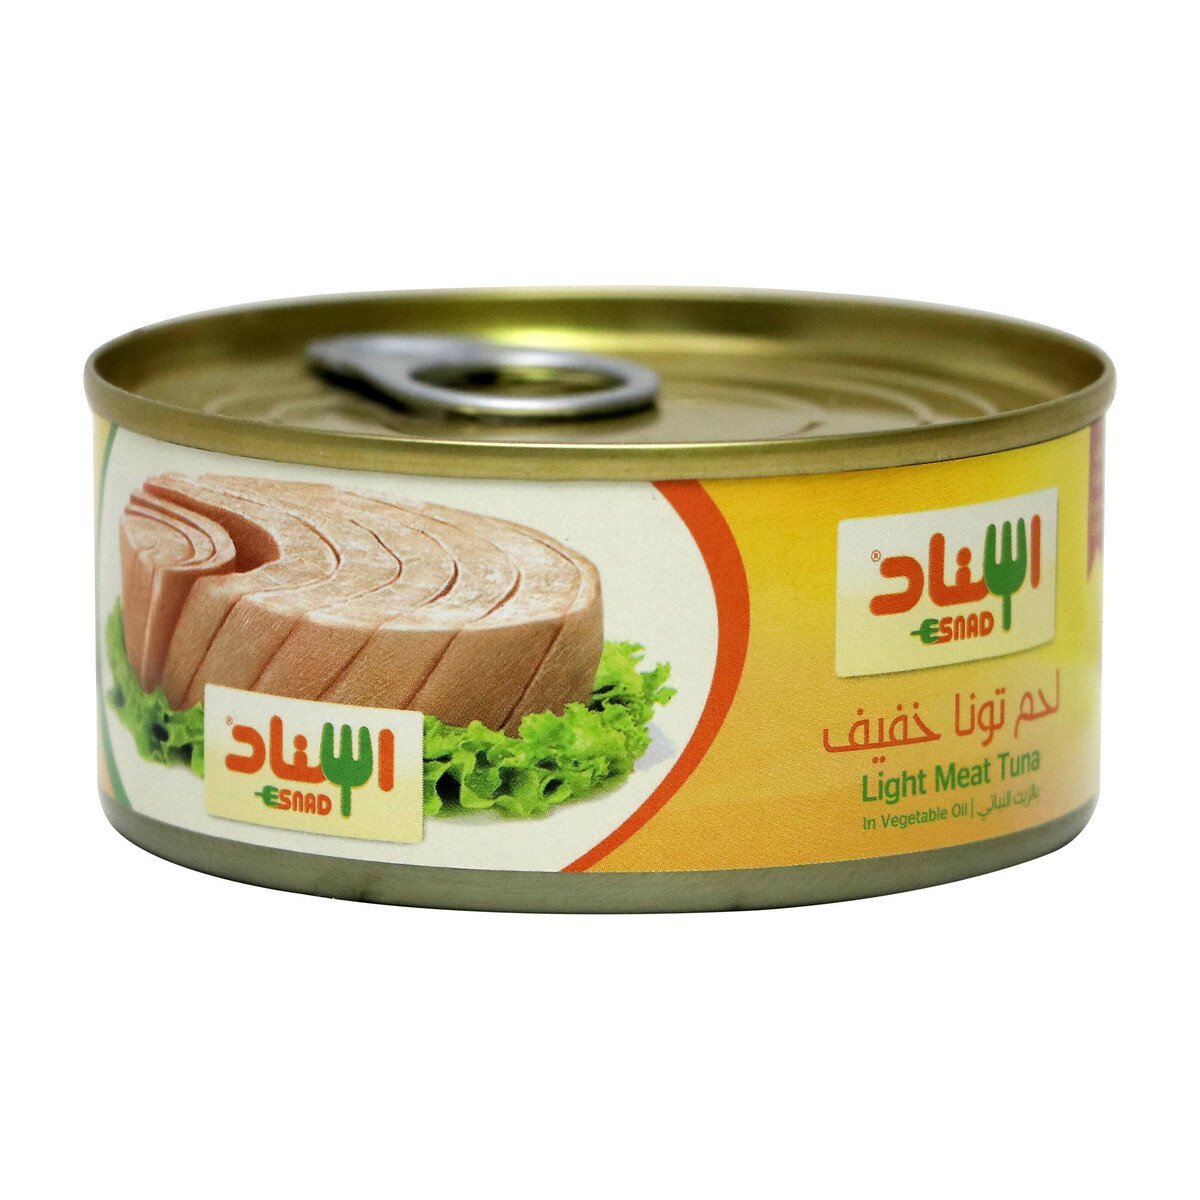 Esnad Light Meat Tuna in Vegetable Oil 165g